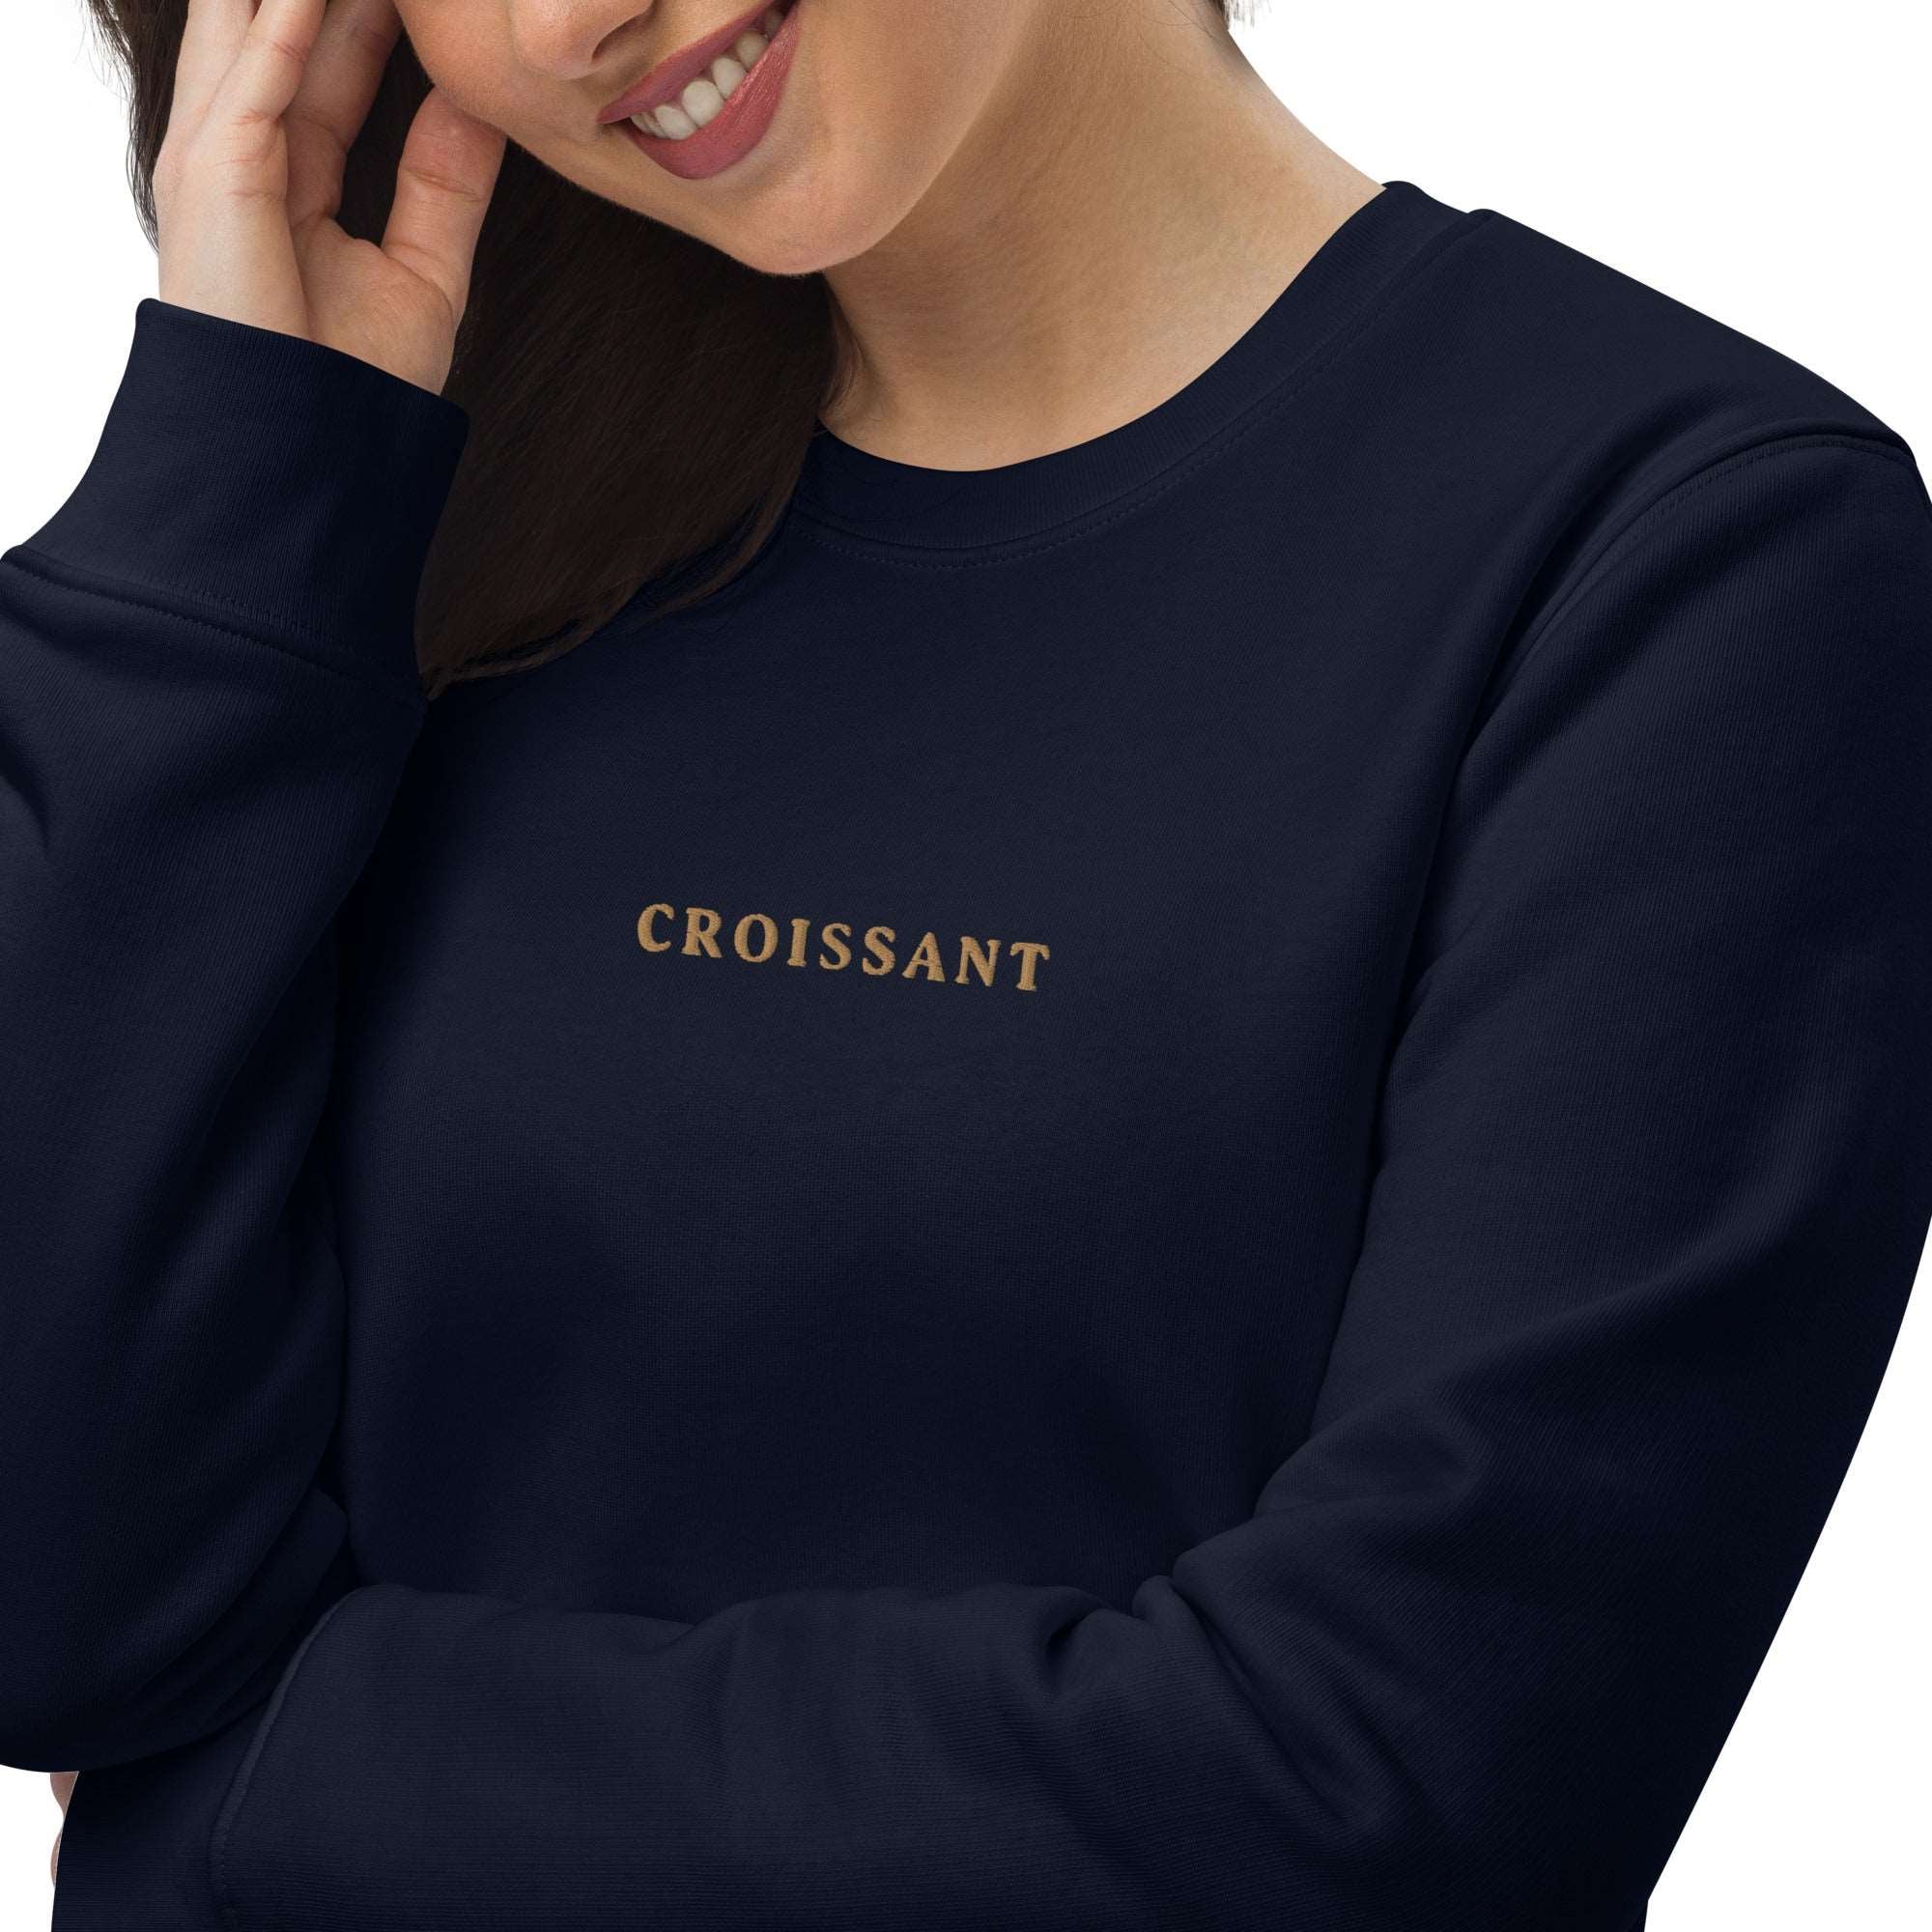 Croissant - Organic Embroidered Sweatshirt - The Refined Spirit